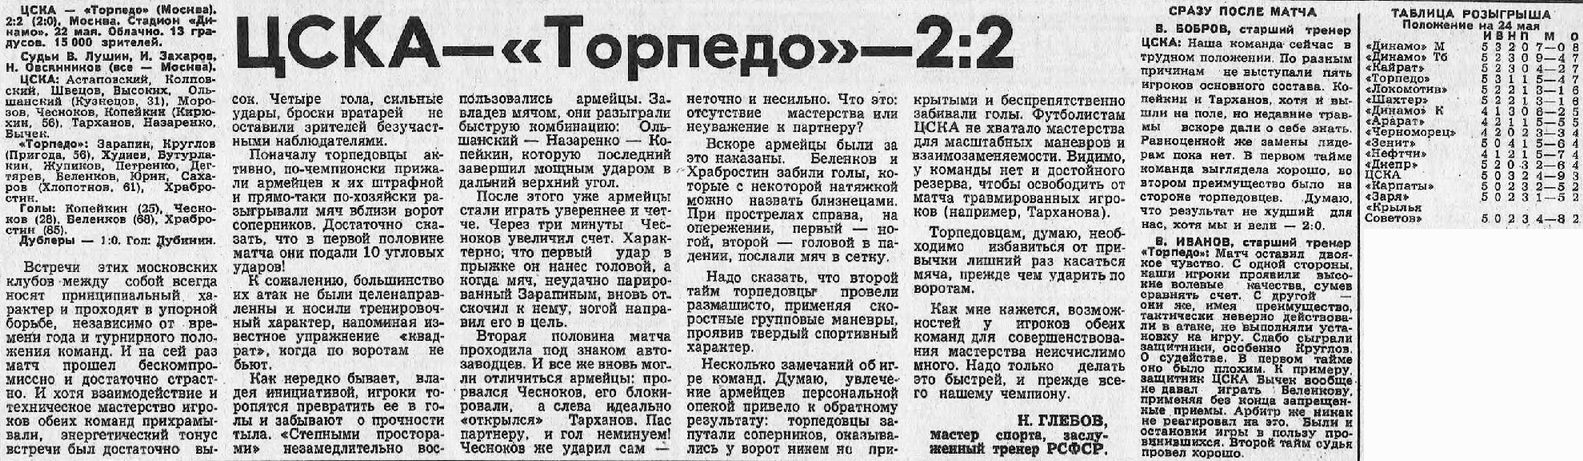 1977-05-22.CSKA-TorpedoM.3